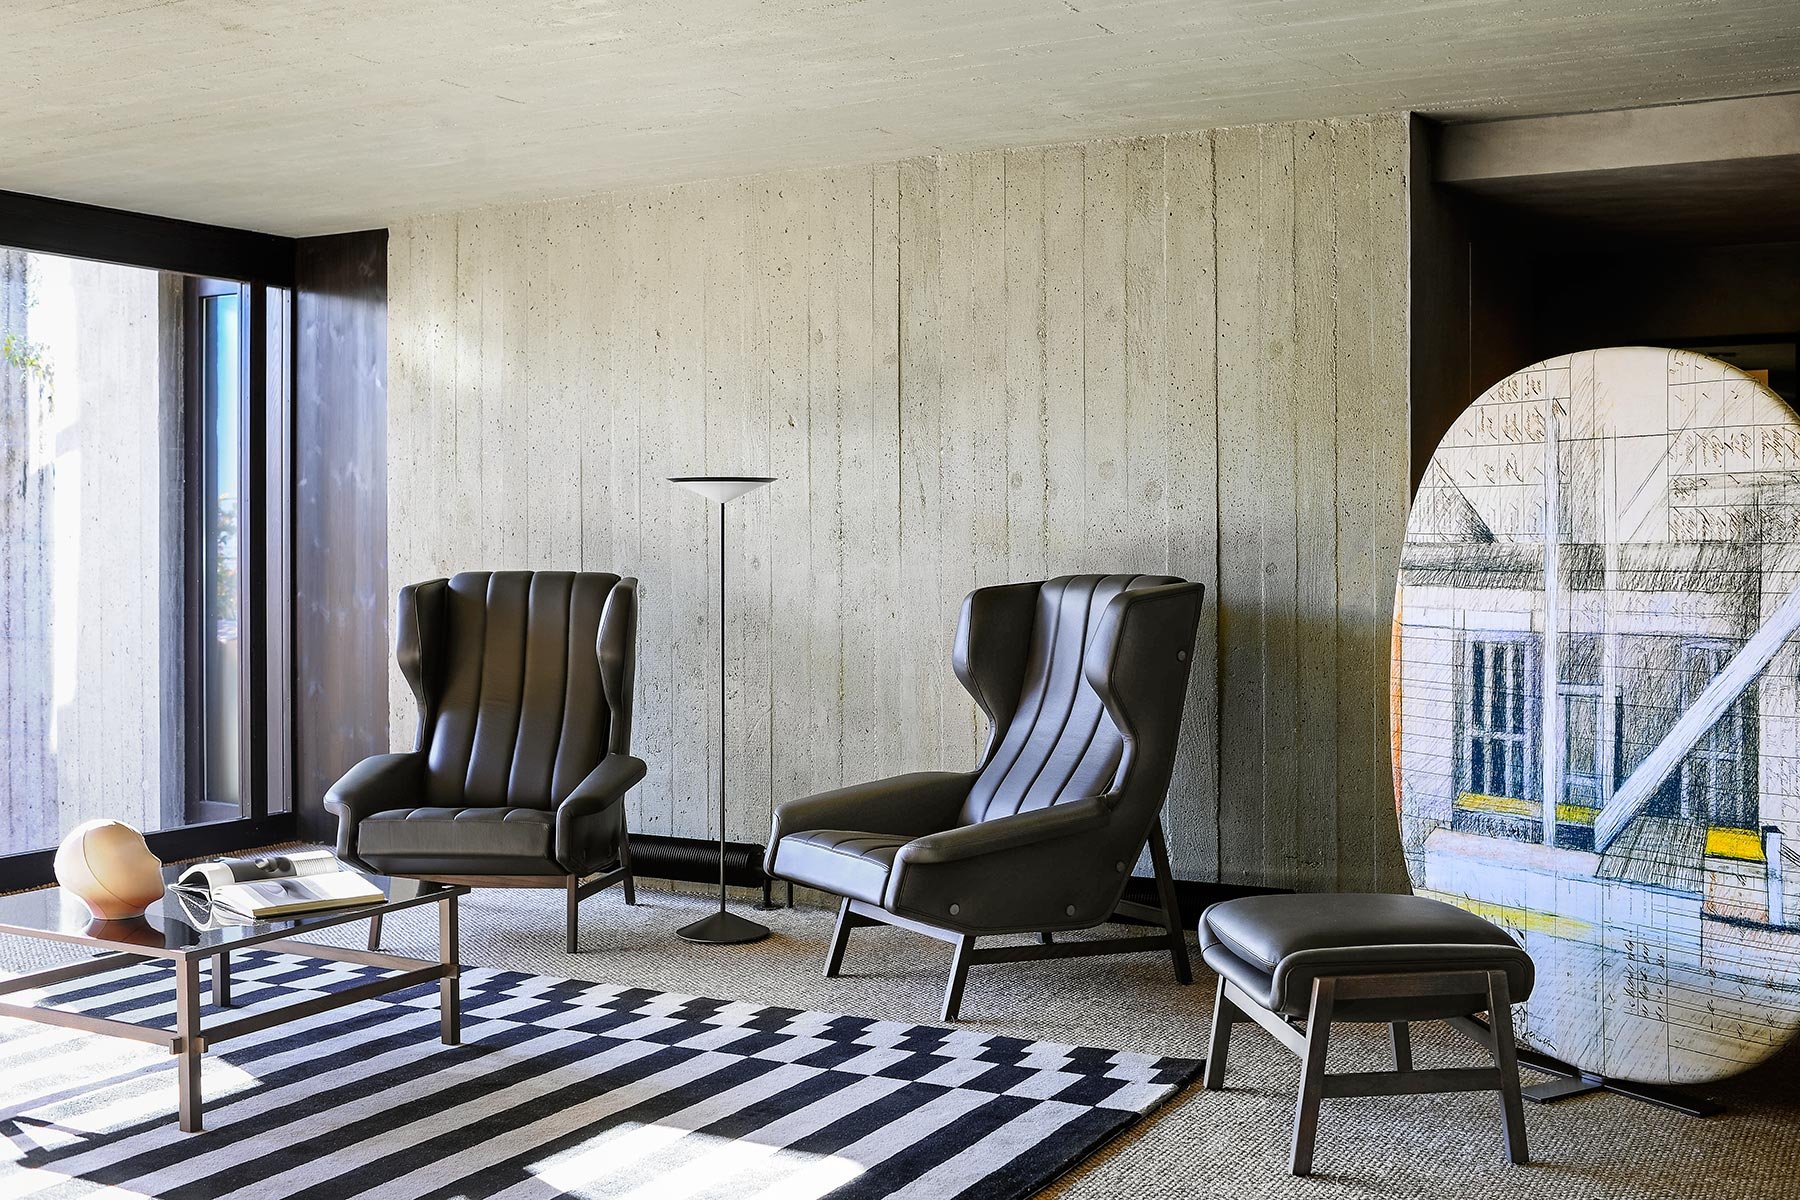 Giulia Armchair lounge from Tacchini, designed by Gianfranco Frattini